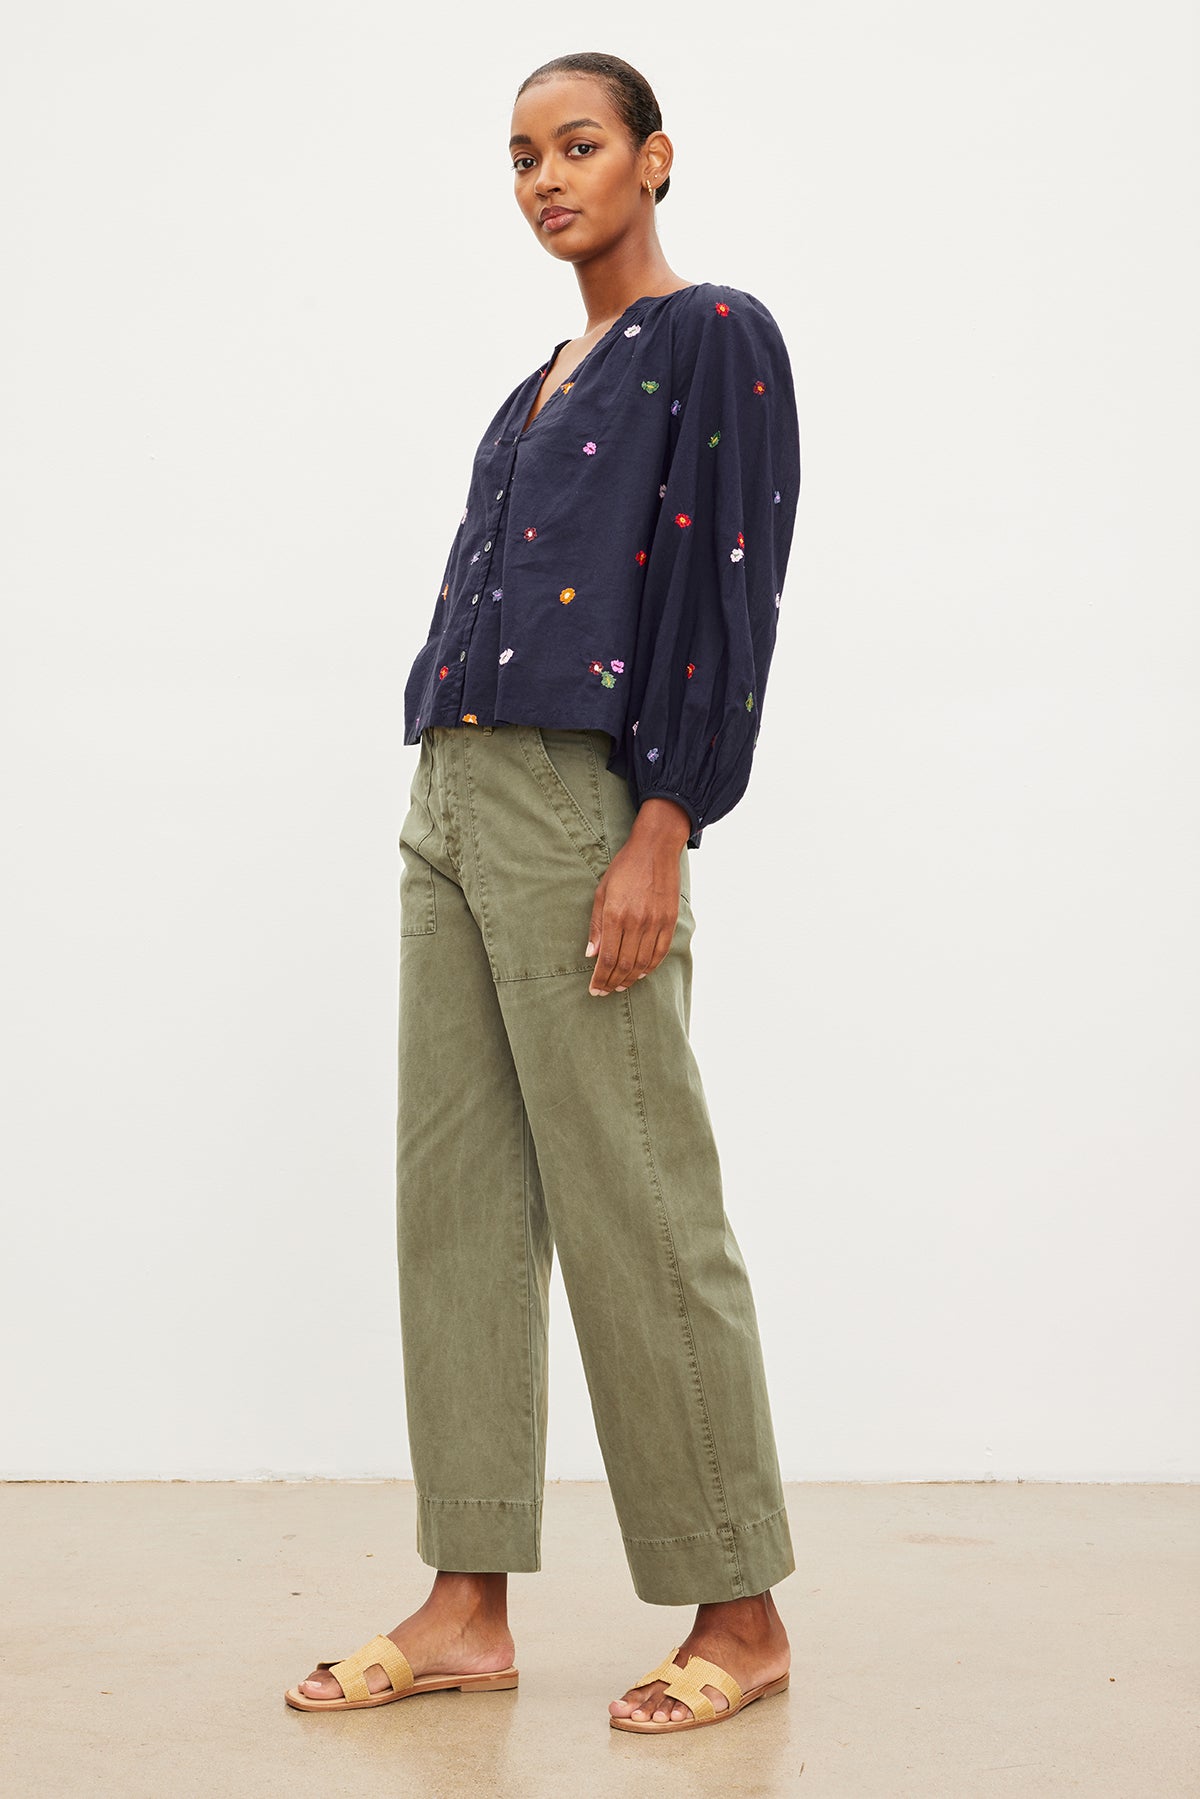 The model is wearing the Velvet by Graham & Spencer "ARETHA EMBROIDERED BOHO TOP" blouse and velvet pants.-35955411452097